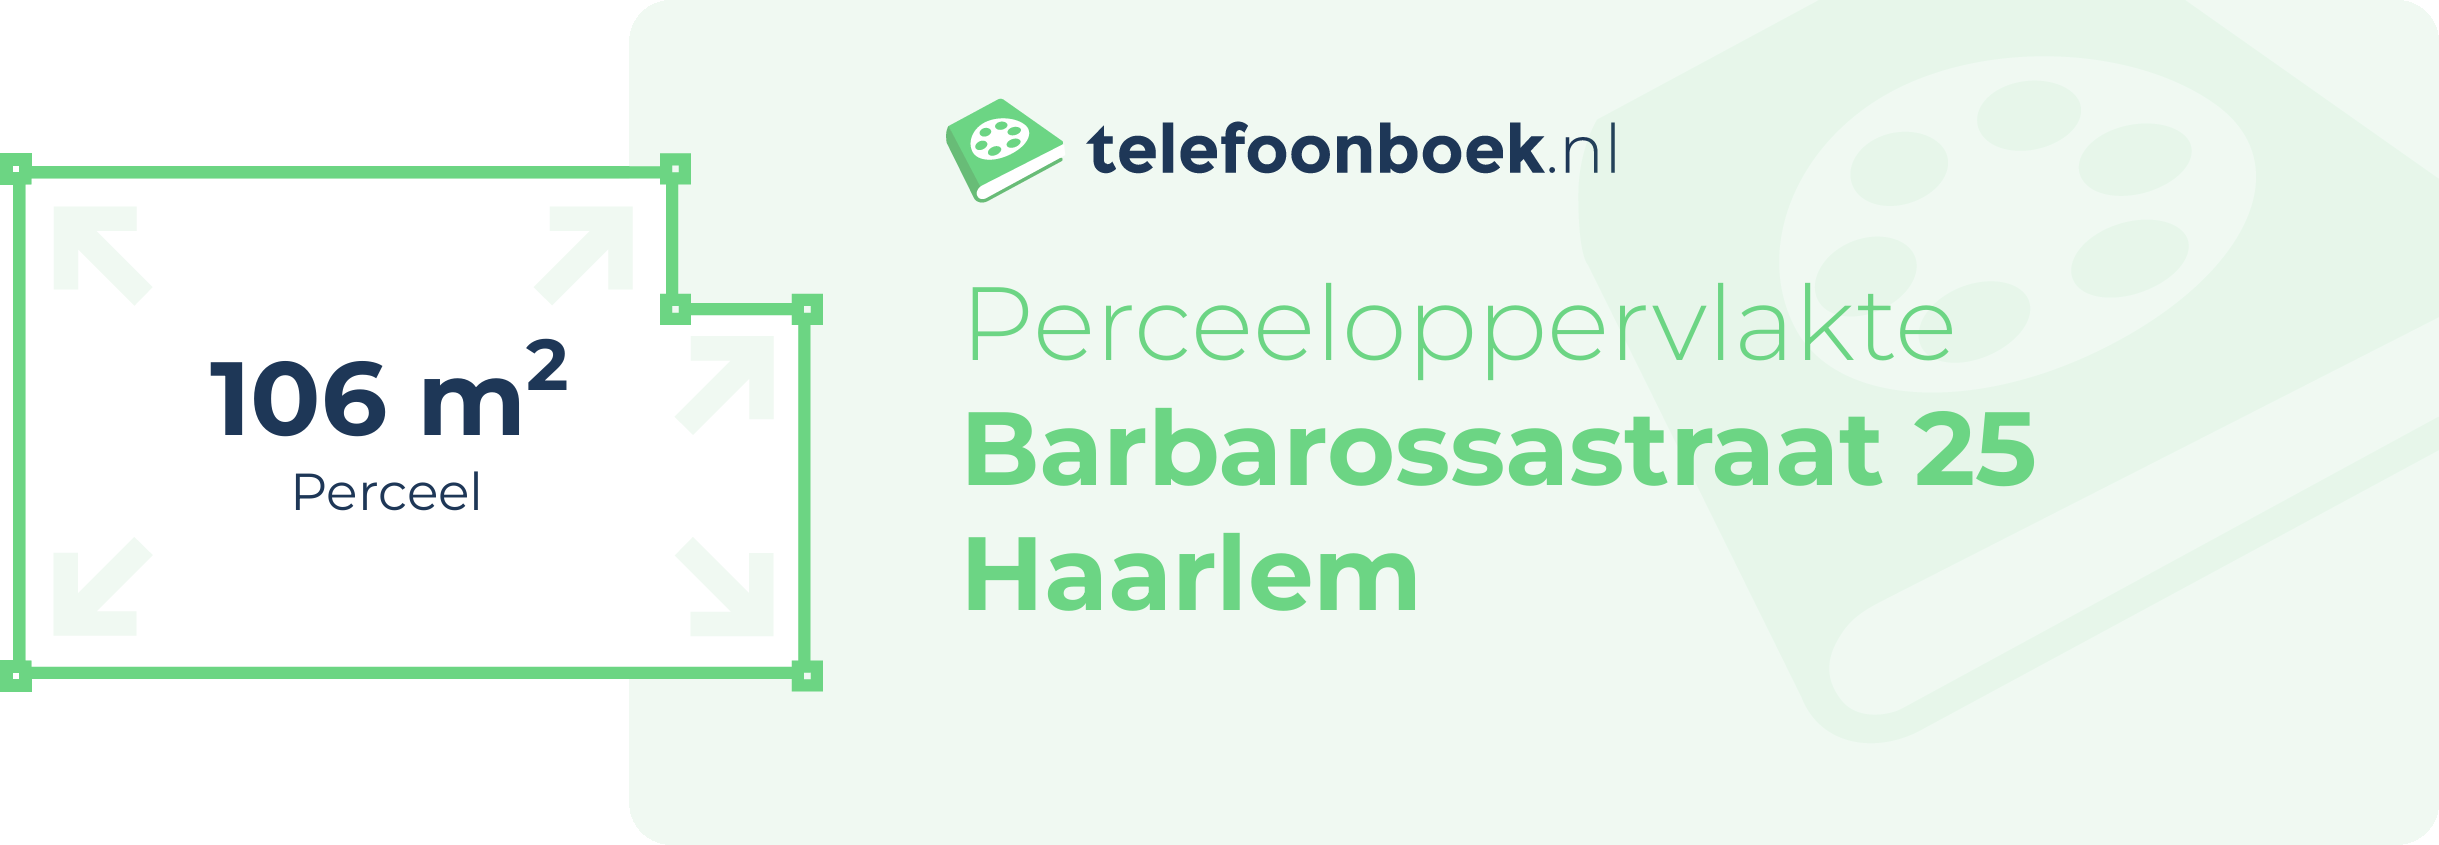 Perceeloppervlakte Barbarossastraat 25 Haarlem